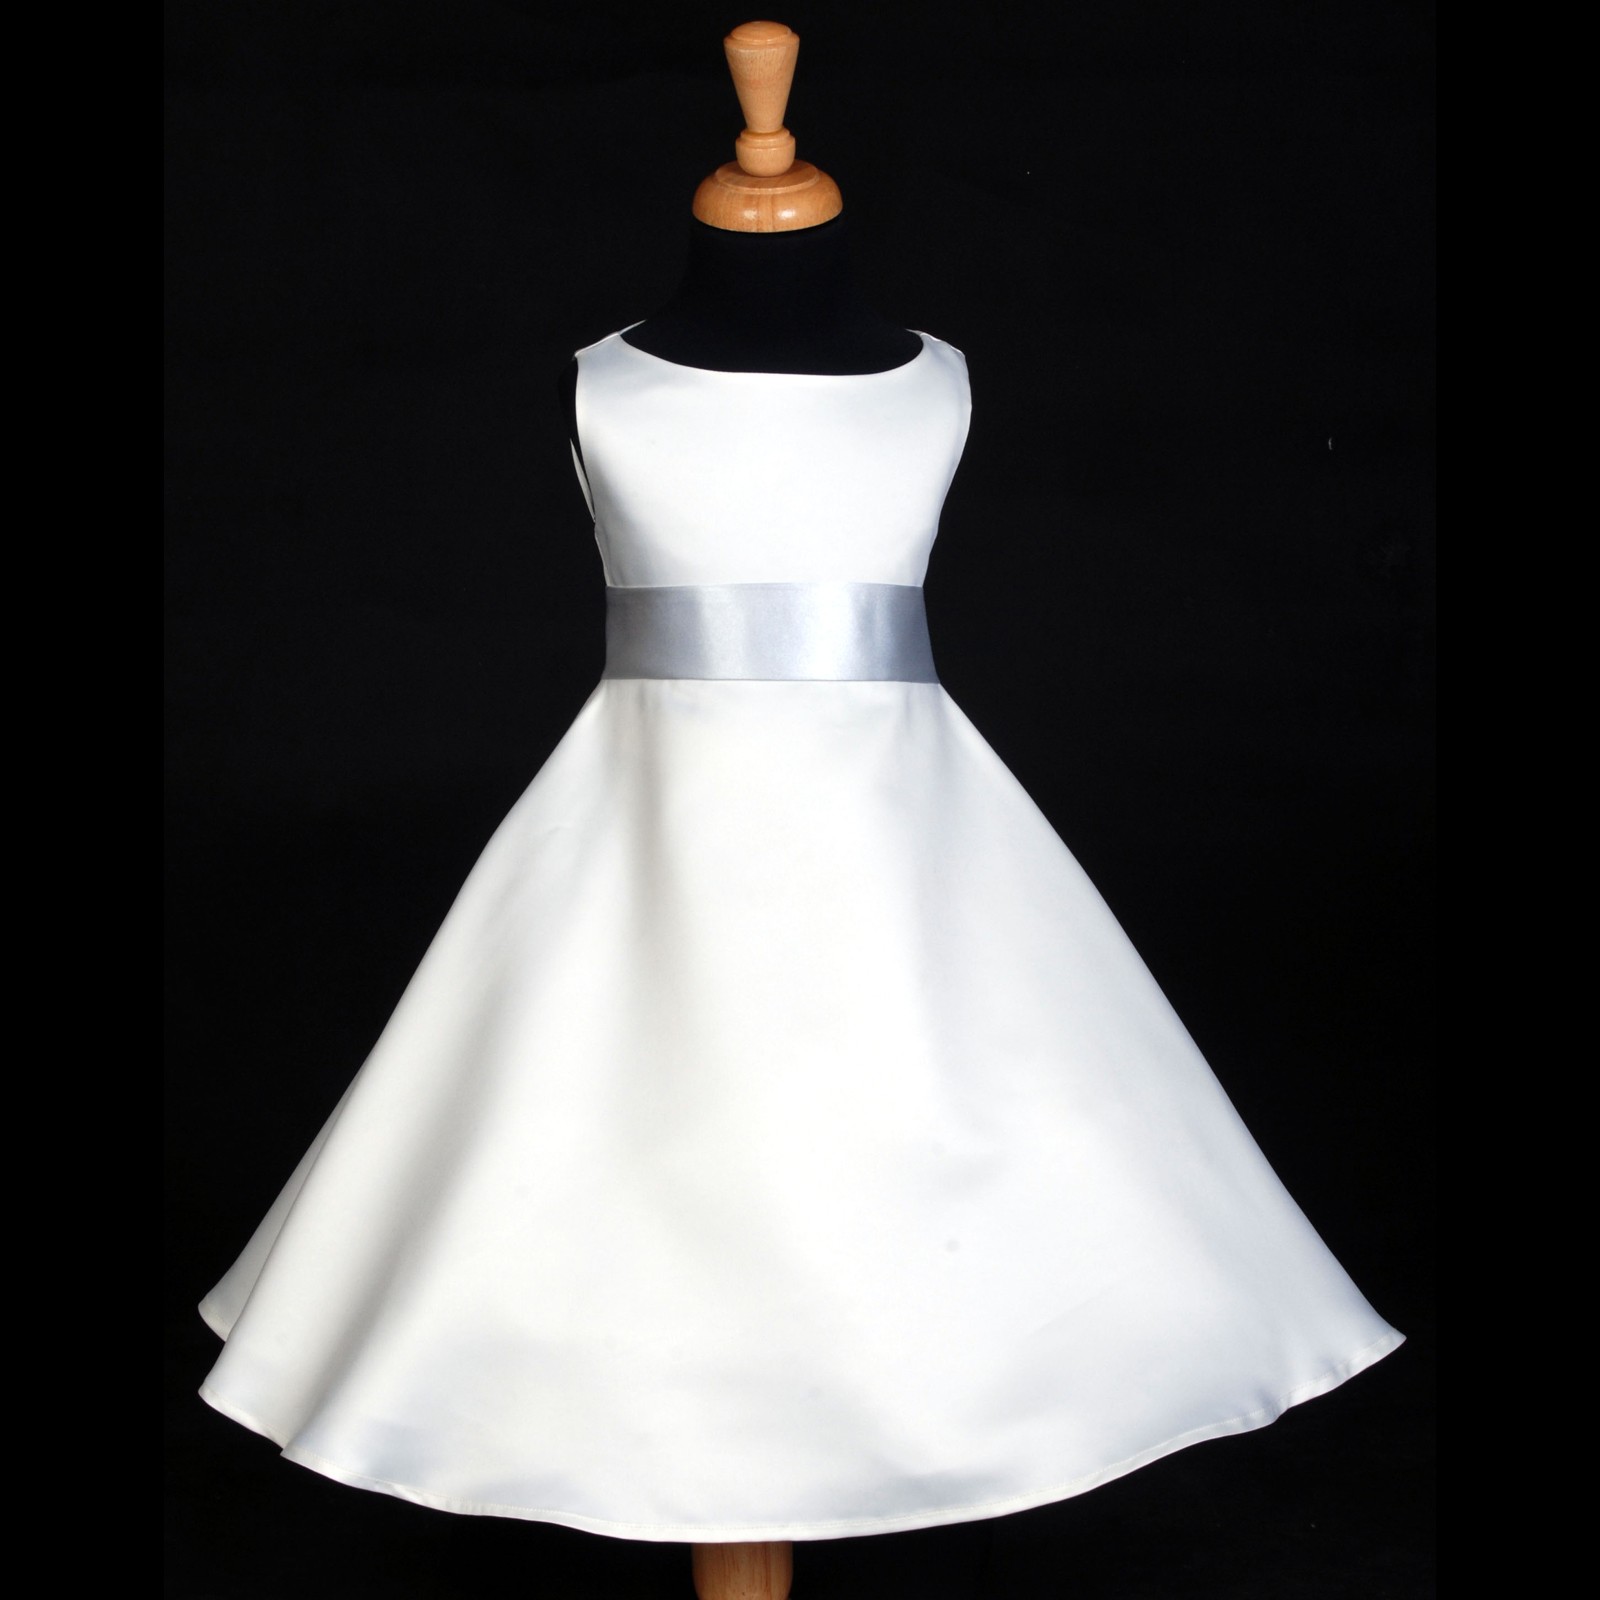 White/Silver A-Line Satin Flower Girl Dress Wedding Bridal 821S